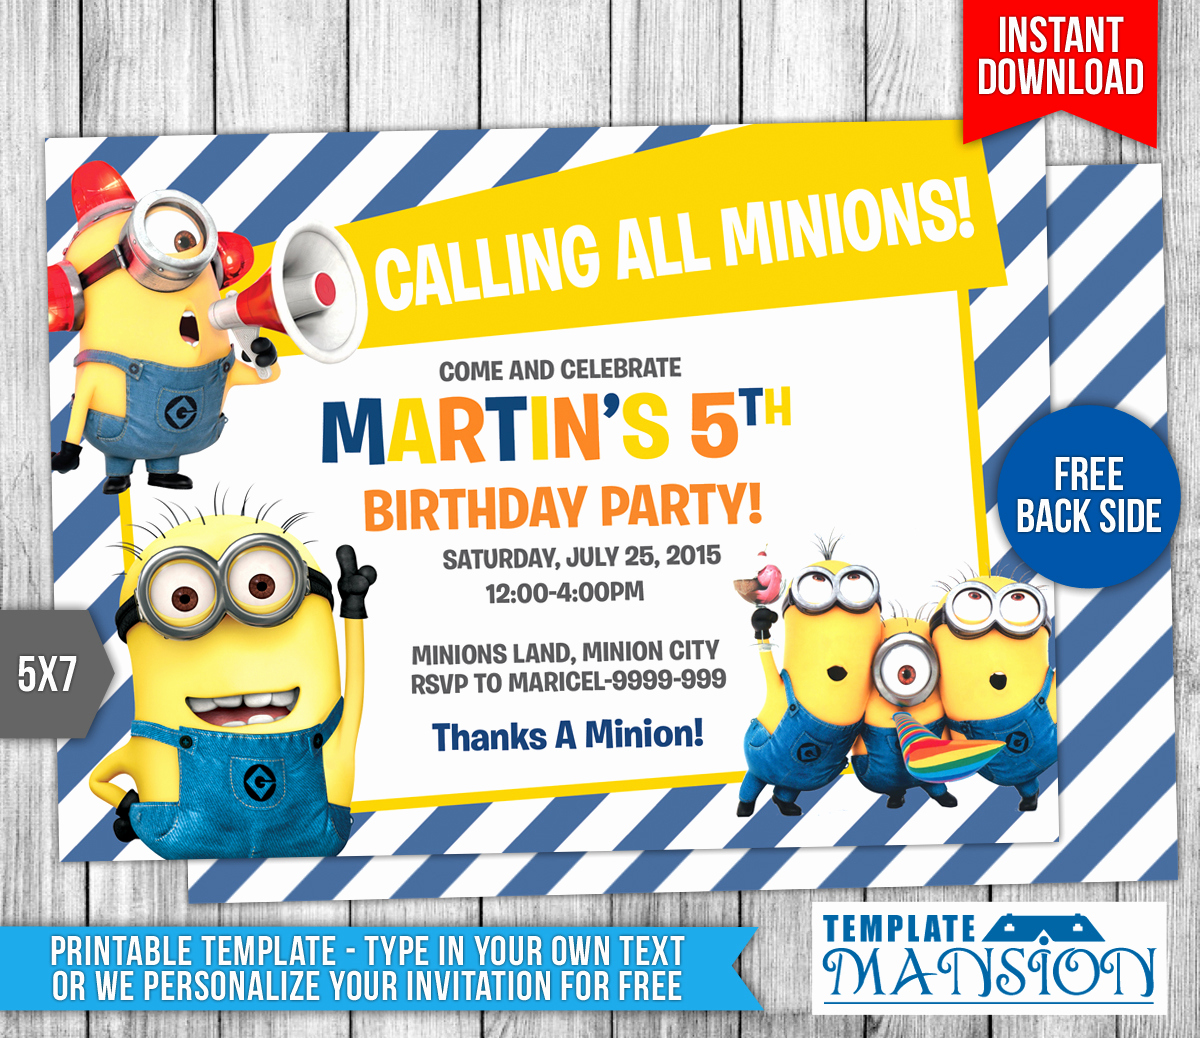 Minion Birthday Party Invitation Elegant Minions Birthday Invitation 7 by Templatemansion On